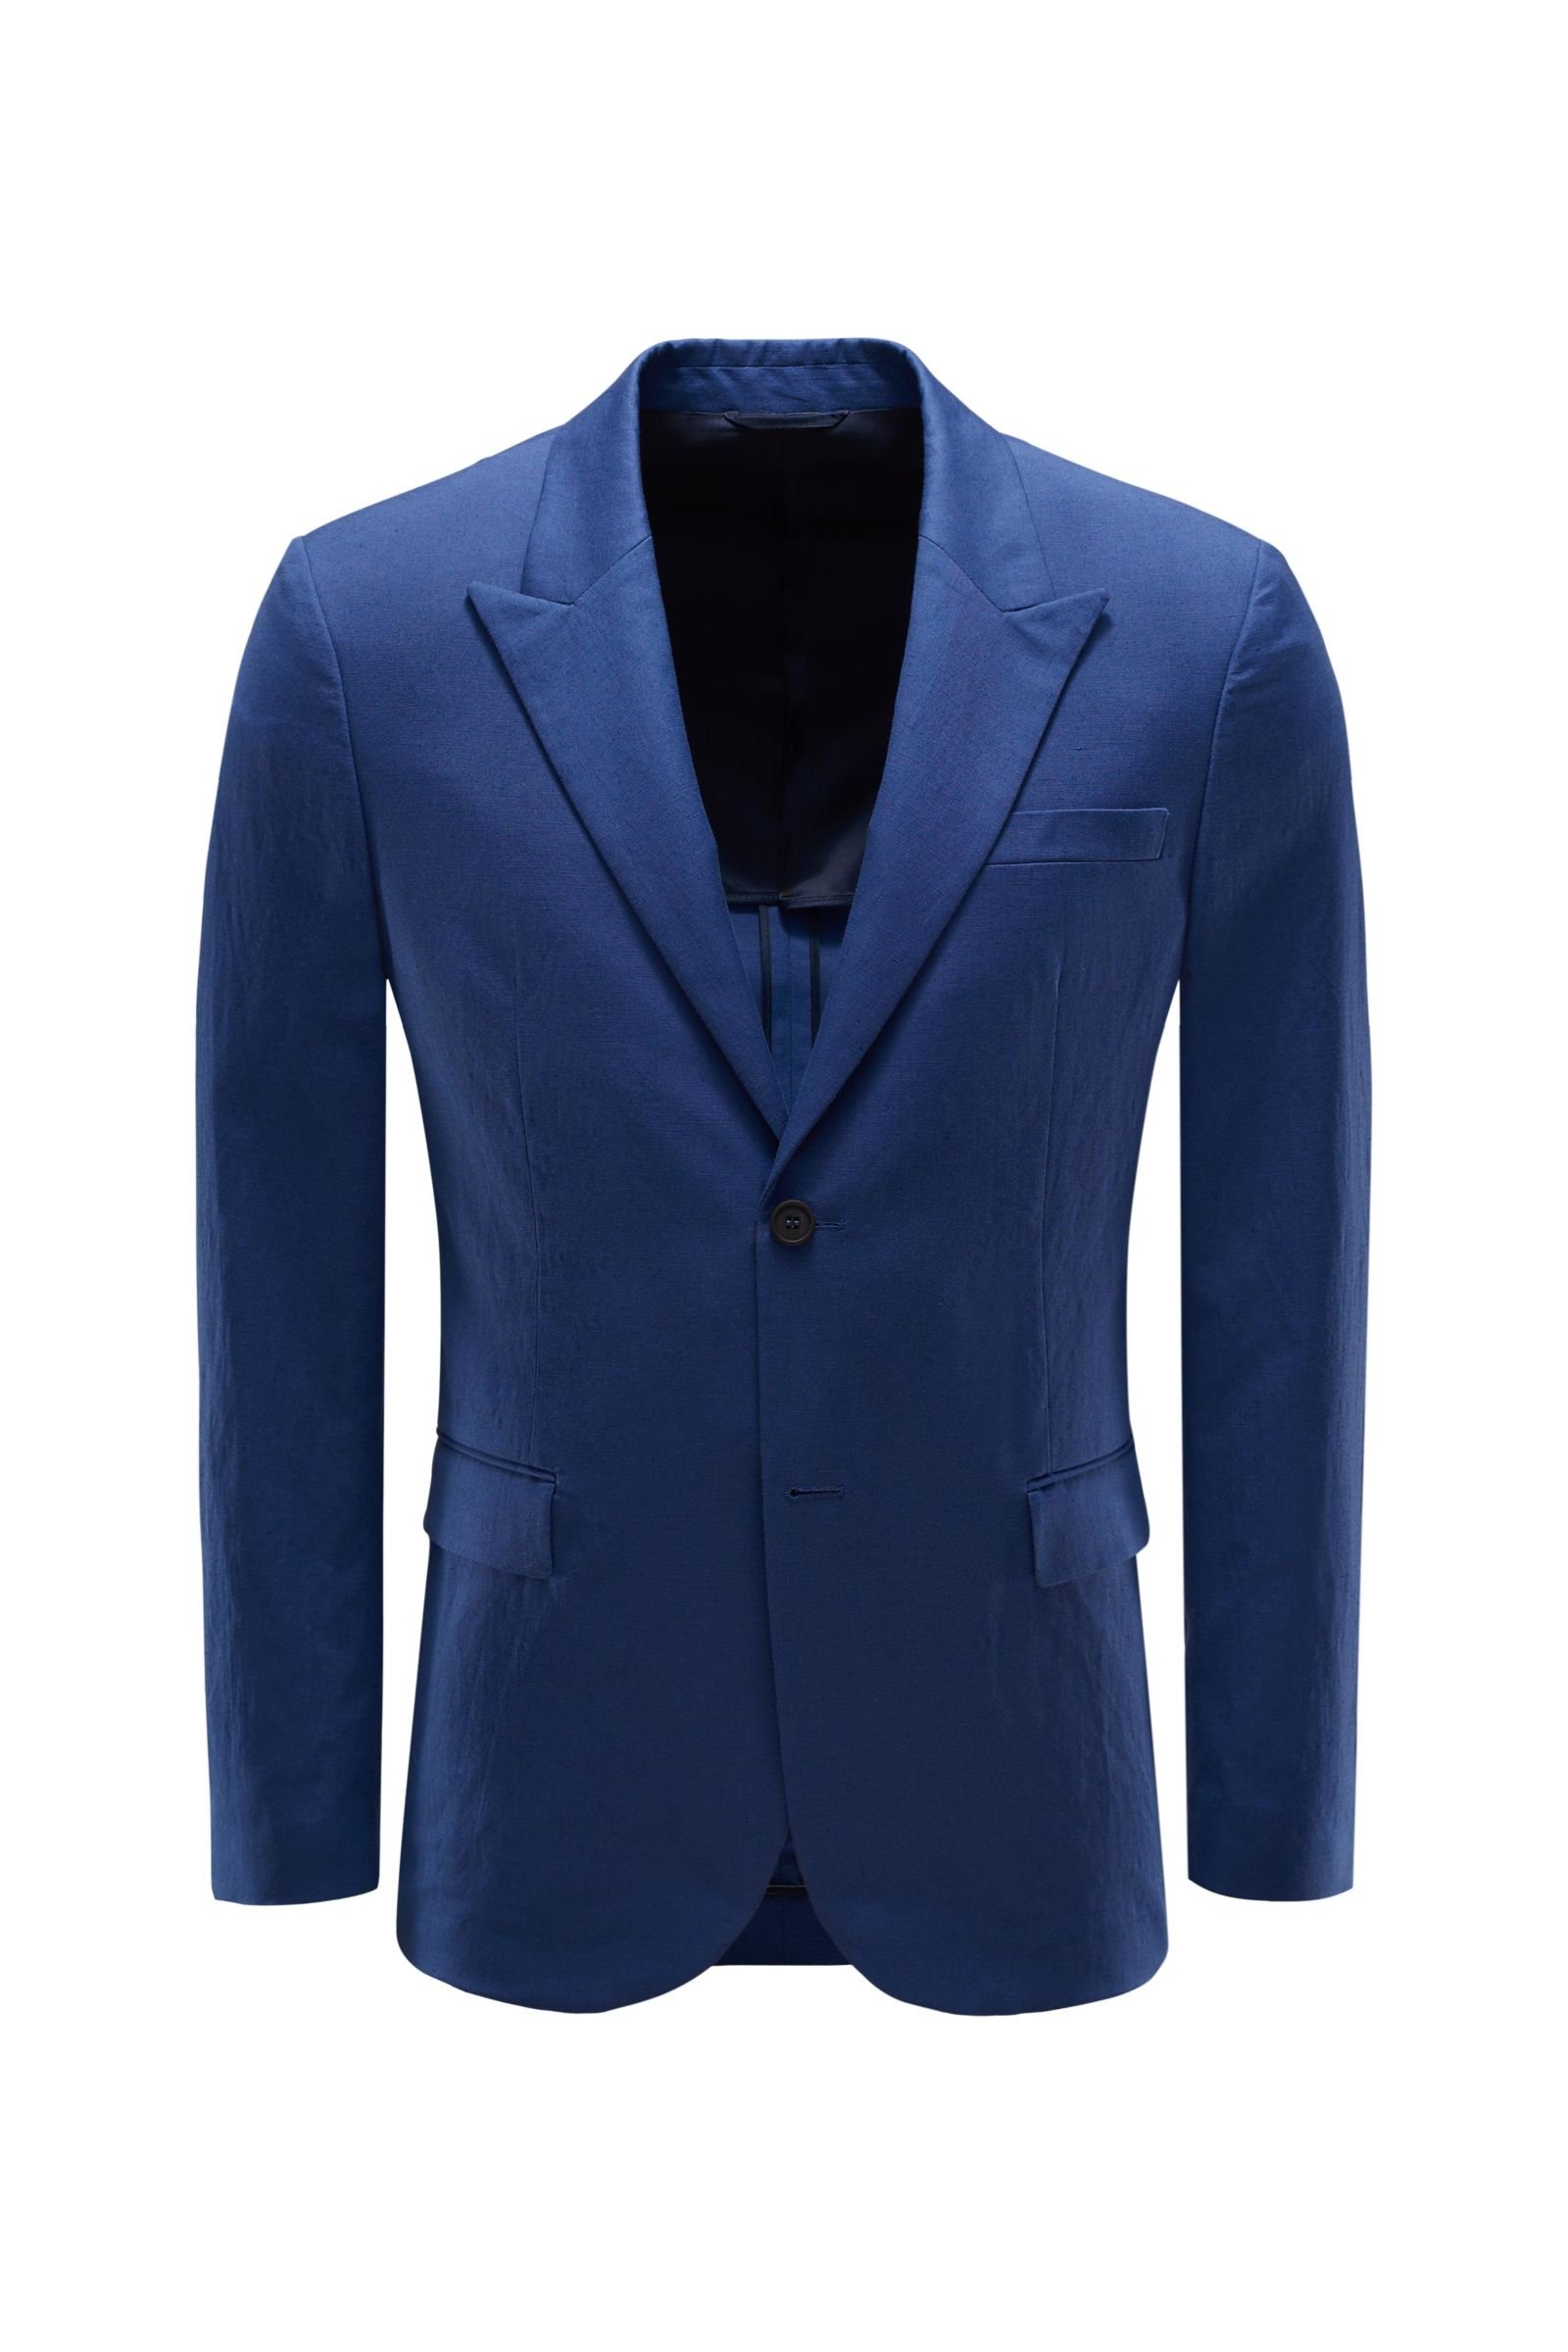 JOSEPH smart-casual jacket 'Cavalaire' blue | BRAUN Hamburg